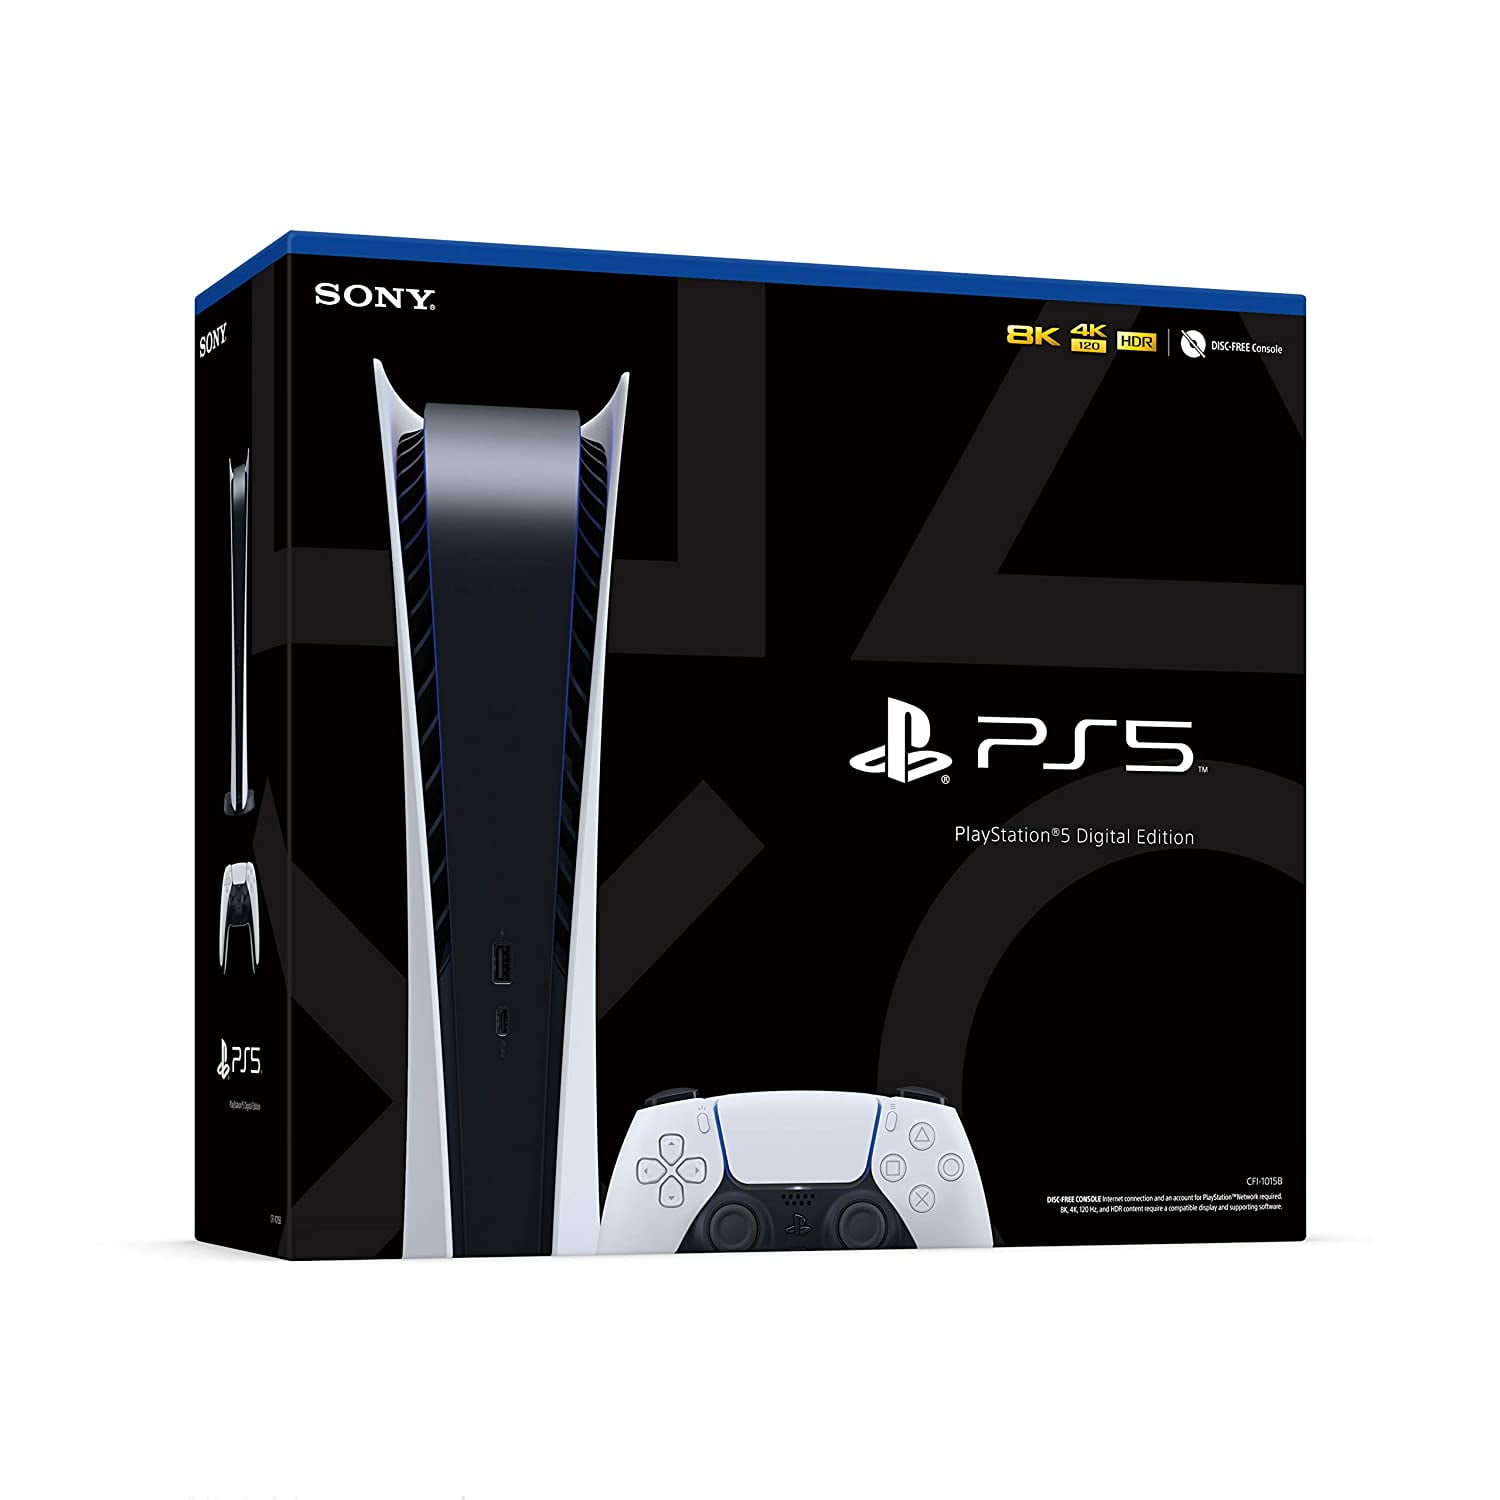 Ratchet & Clank: Rift Apart - Sony PlayStation 5 Brand New SEALED  711719541189